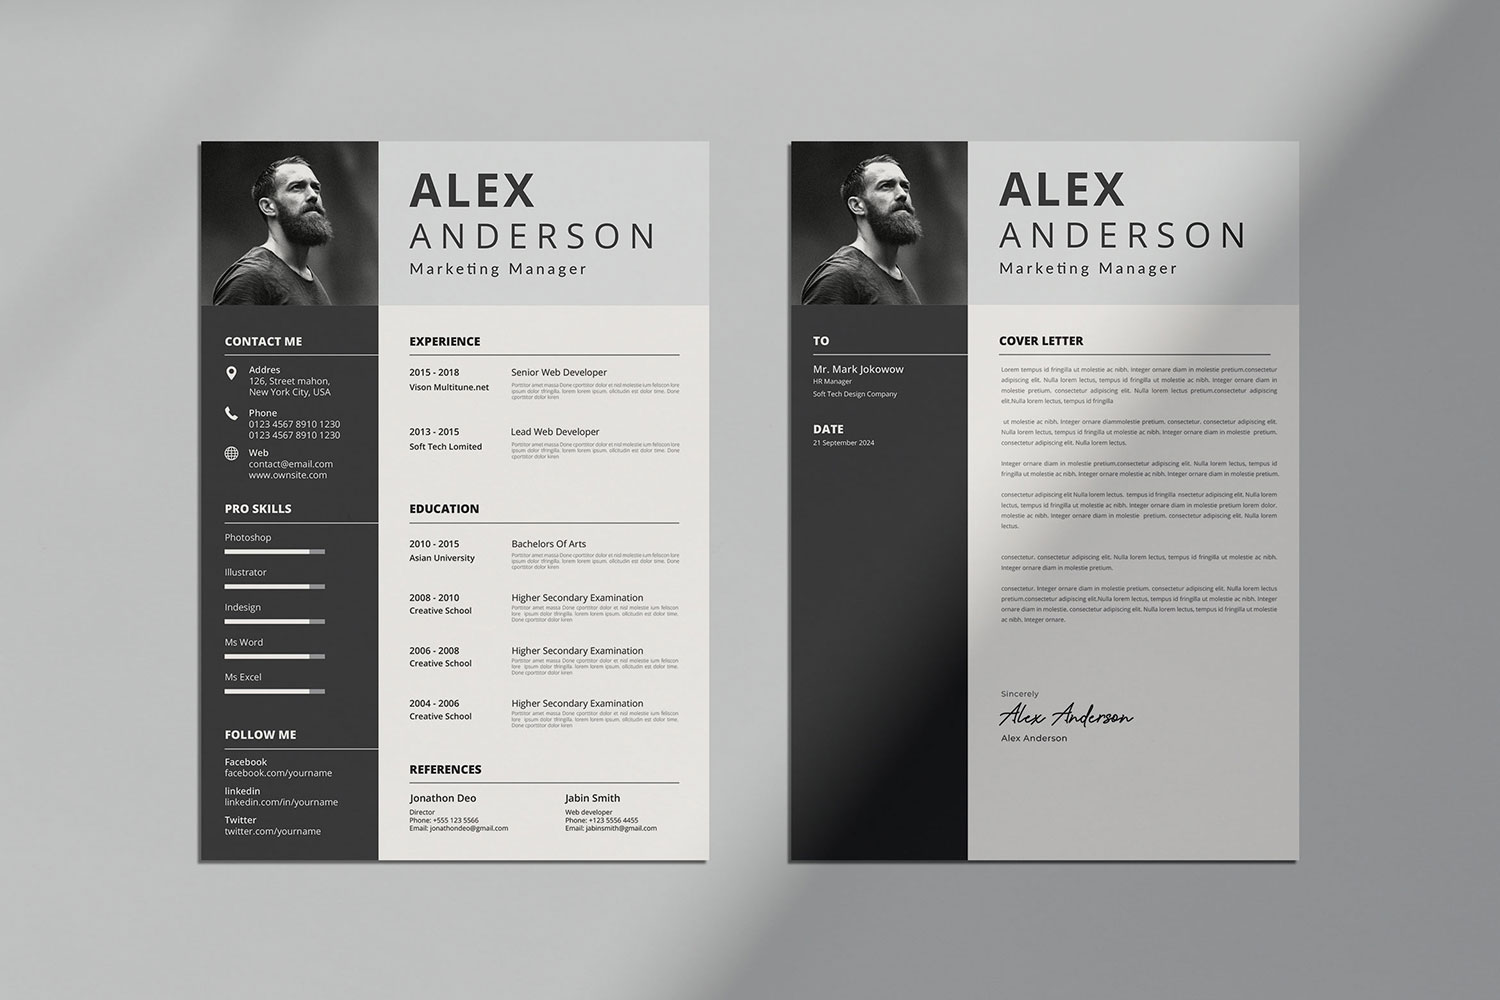 Alex Anderson - Creative Director CV Resume Template